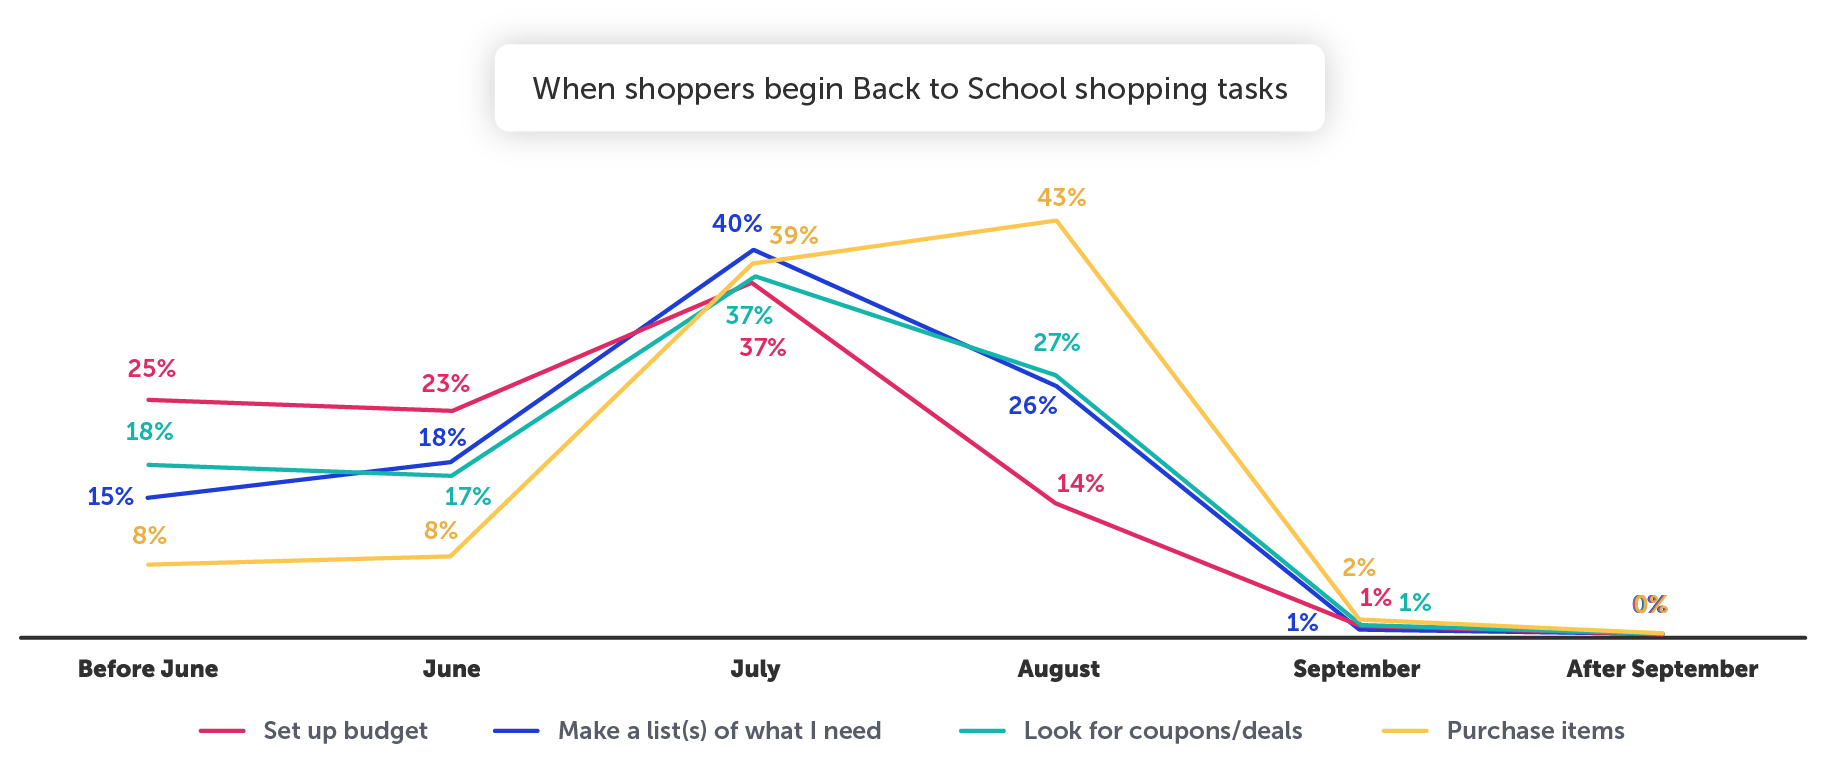 Seasonal Trends - BTS - When shoppers begin BTS shopping tasks